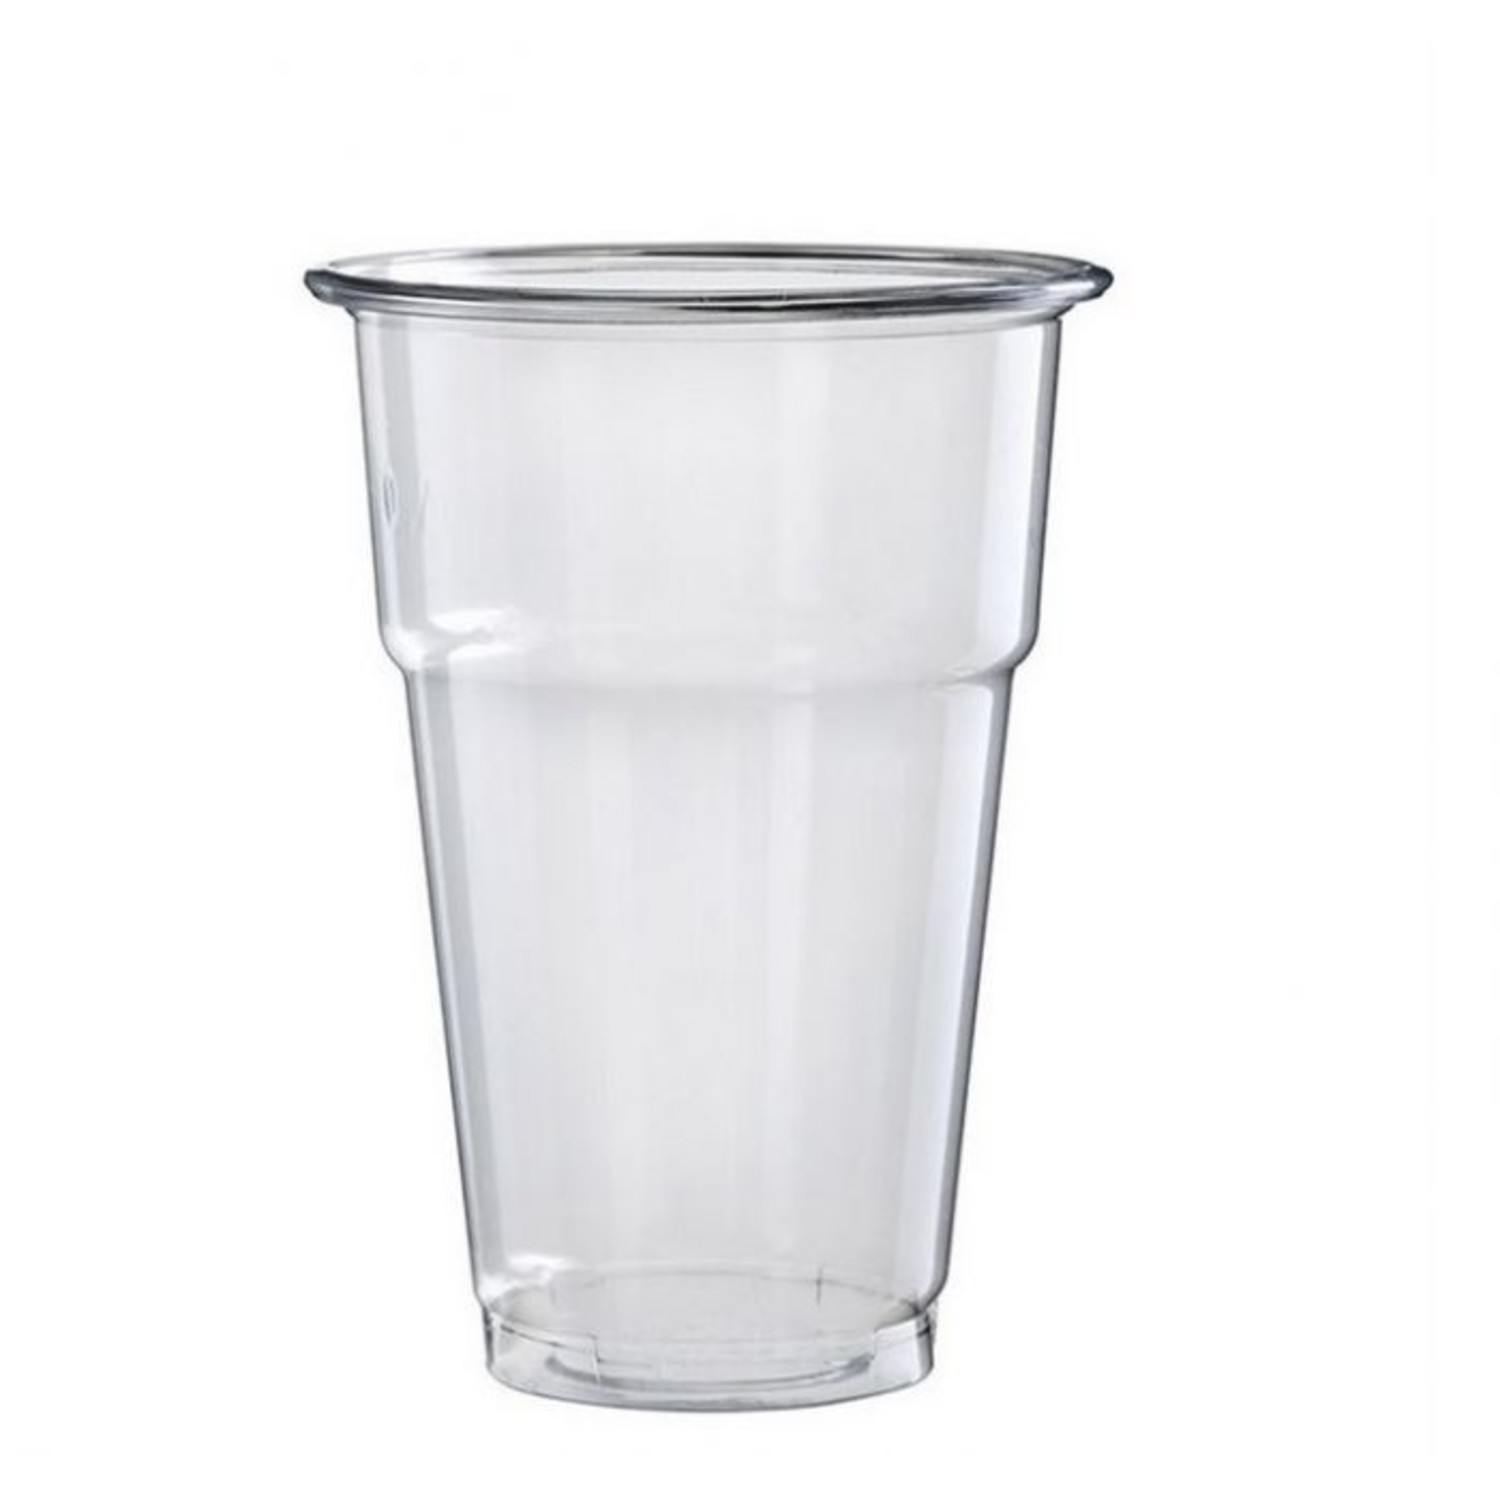 Пластиковые стаканы 500 мл купить. Стакан одноразовый, 500 мл. Стакан 54с-240154-10.